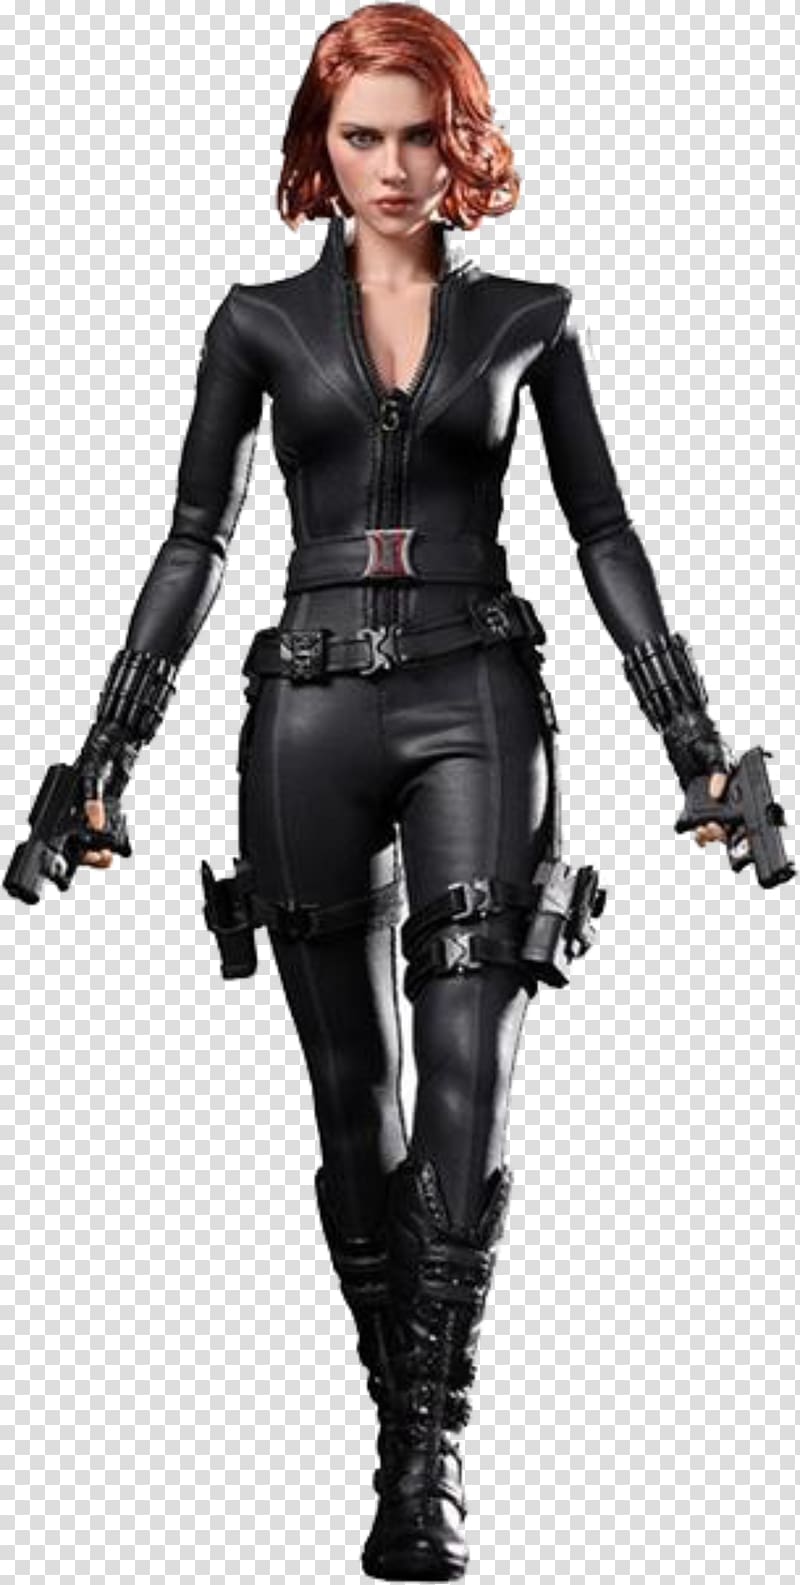 Scarlett Johansson Black Widow The Avengers Costume Do it yourself, Black Widow transparent background PNG clipart